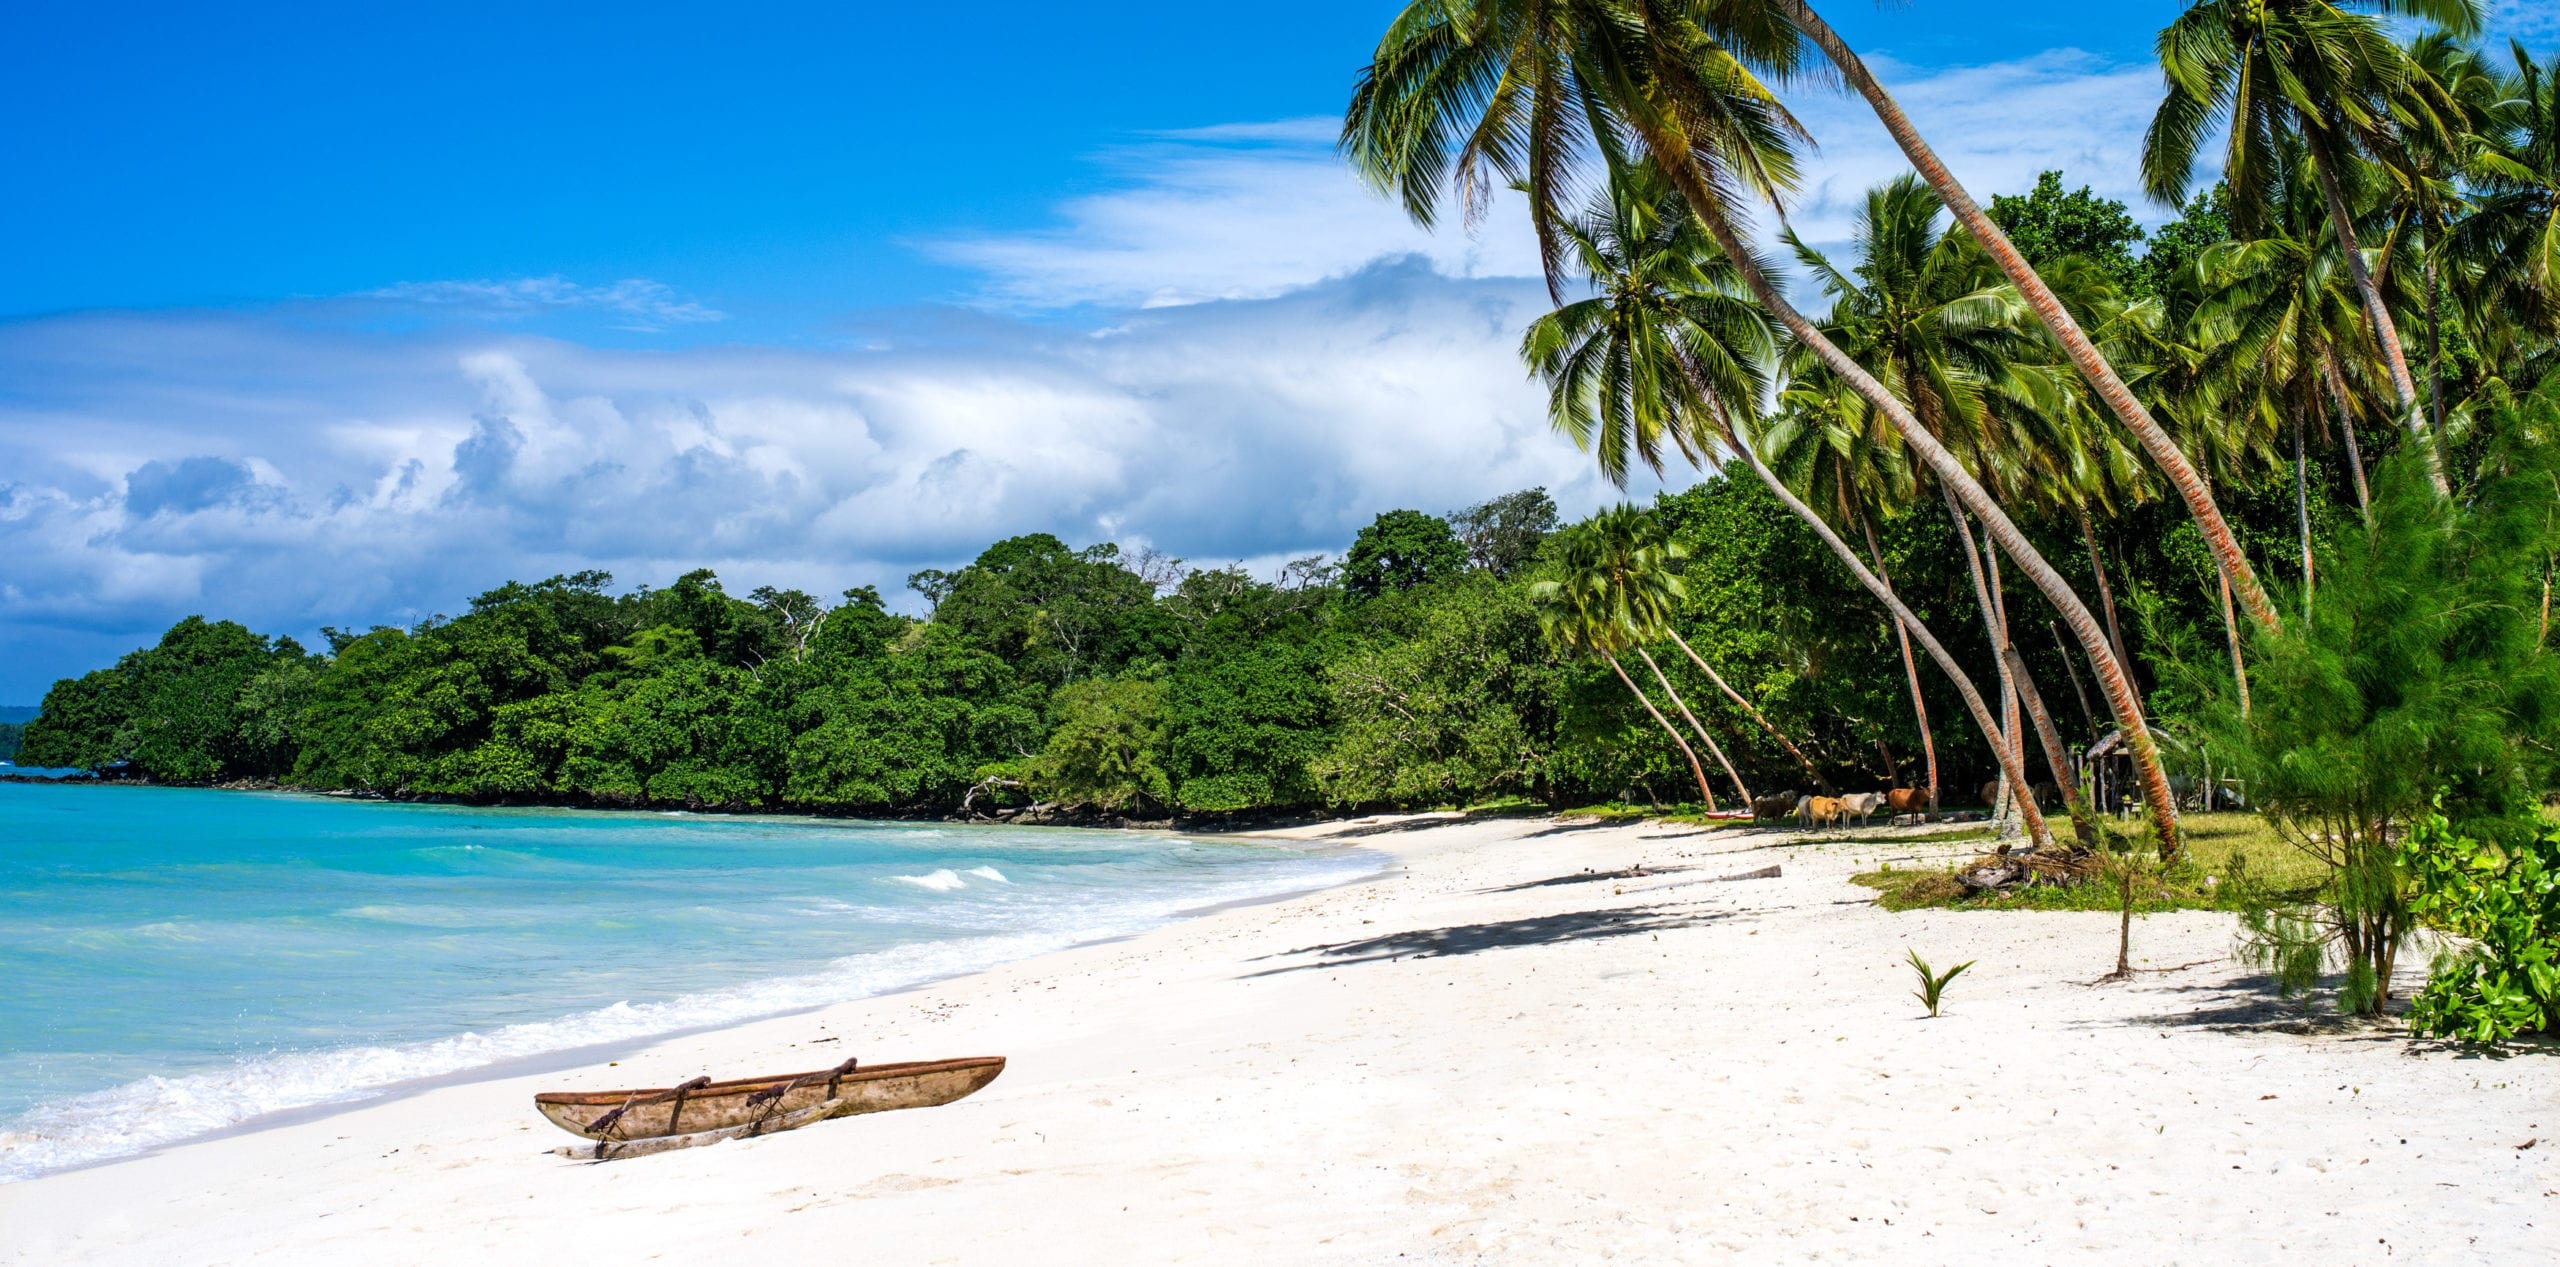 Secluded Vanuatu, Pelorus yacht expeditions, Remote escape, Private adventure, 2560x1270 Dual Screen Desktop